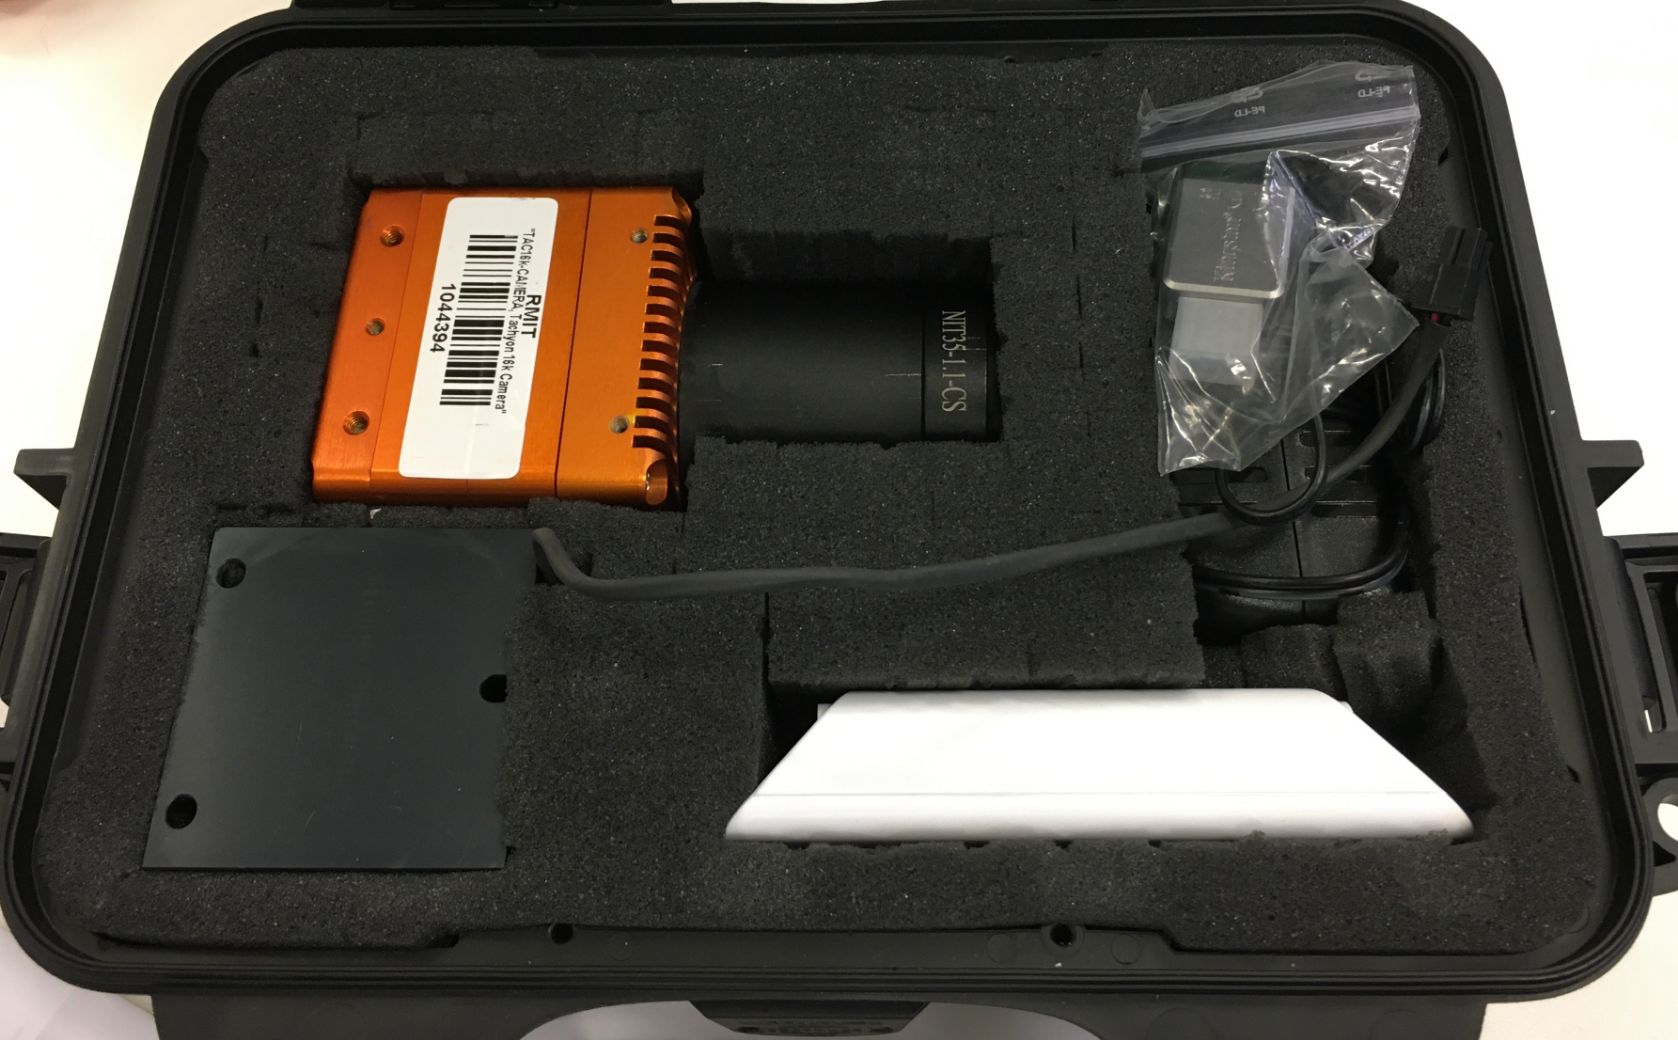 High speed camera lab kit